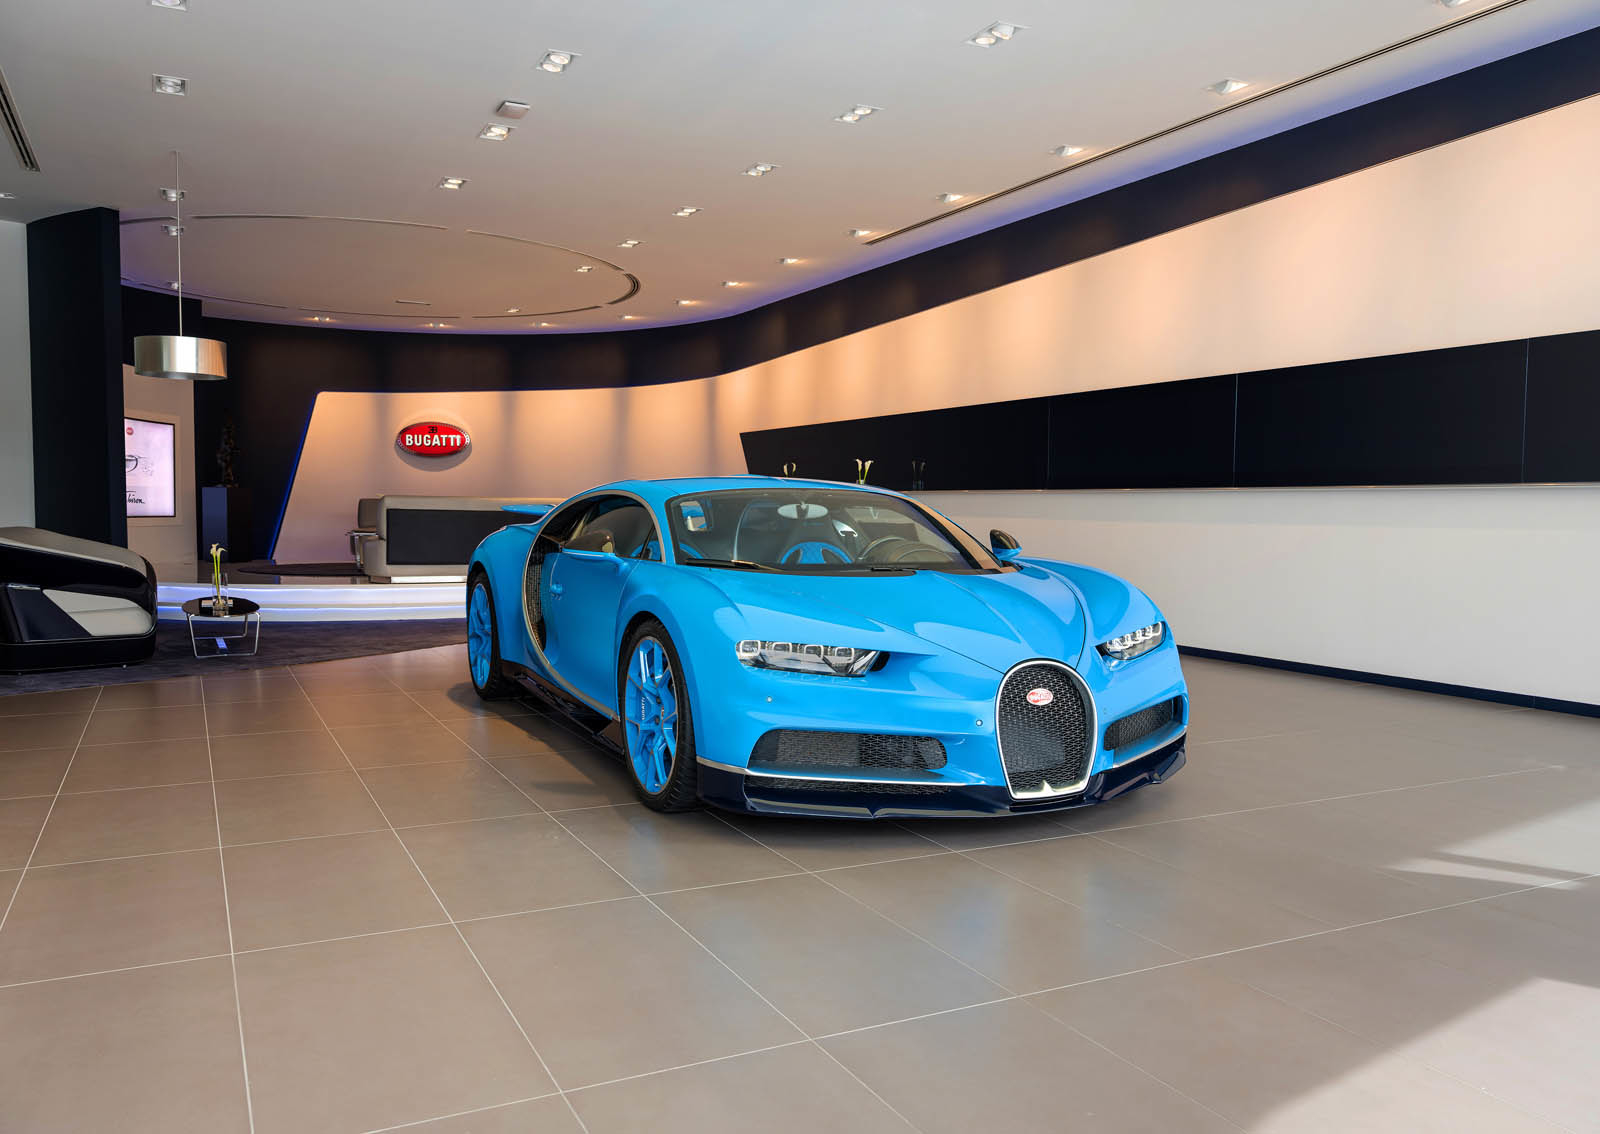 Bugatti showroom Dubai